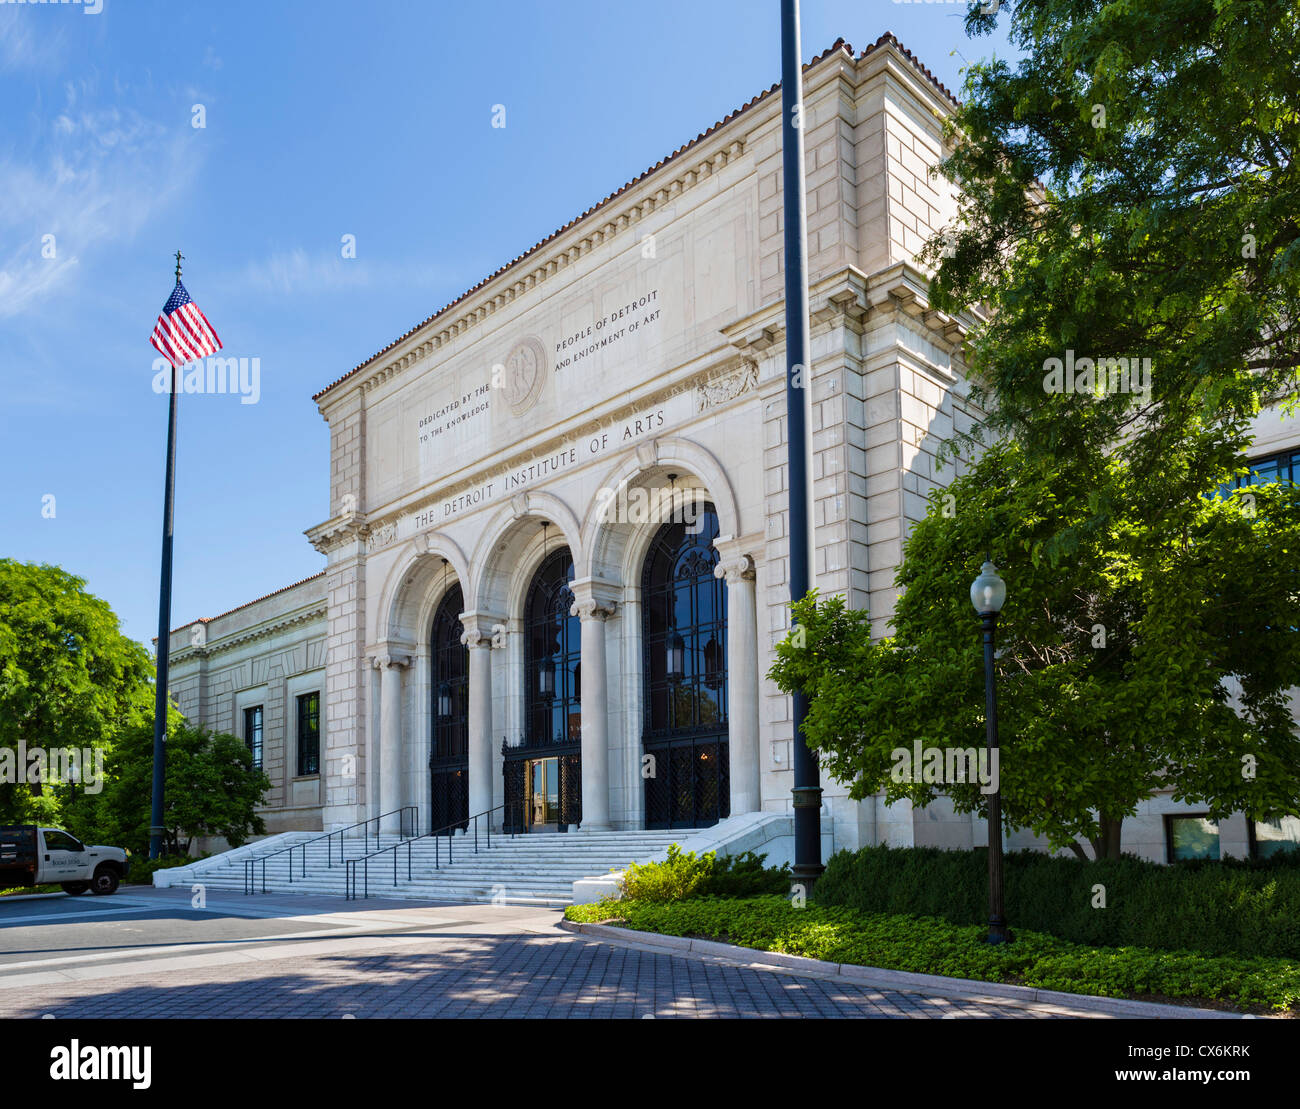 The Detroit Institute of Arts on Woodward Avenue, Detroit Cultural Center, Detroit, Michigan, USA Stock Photo